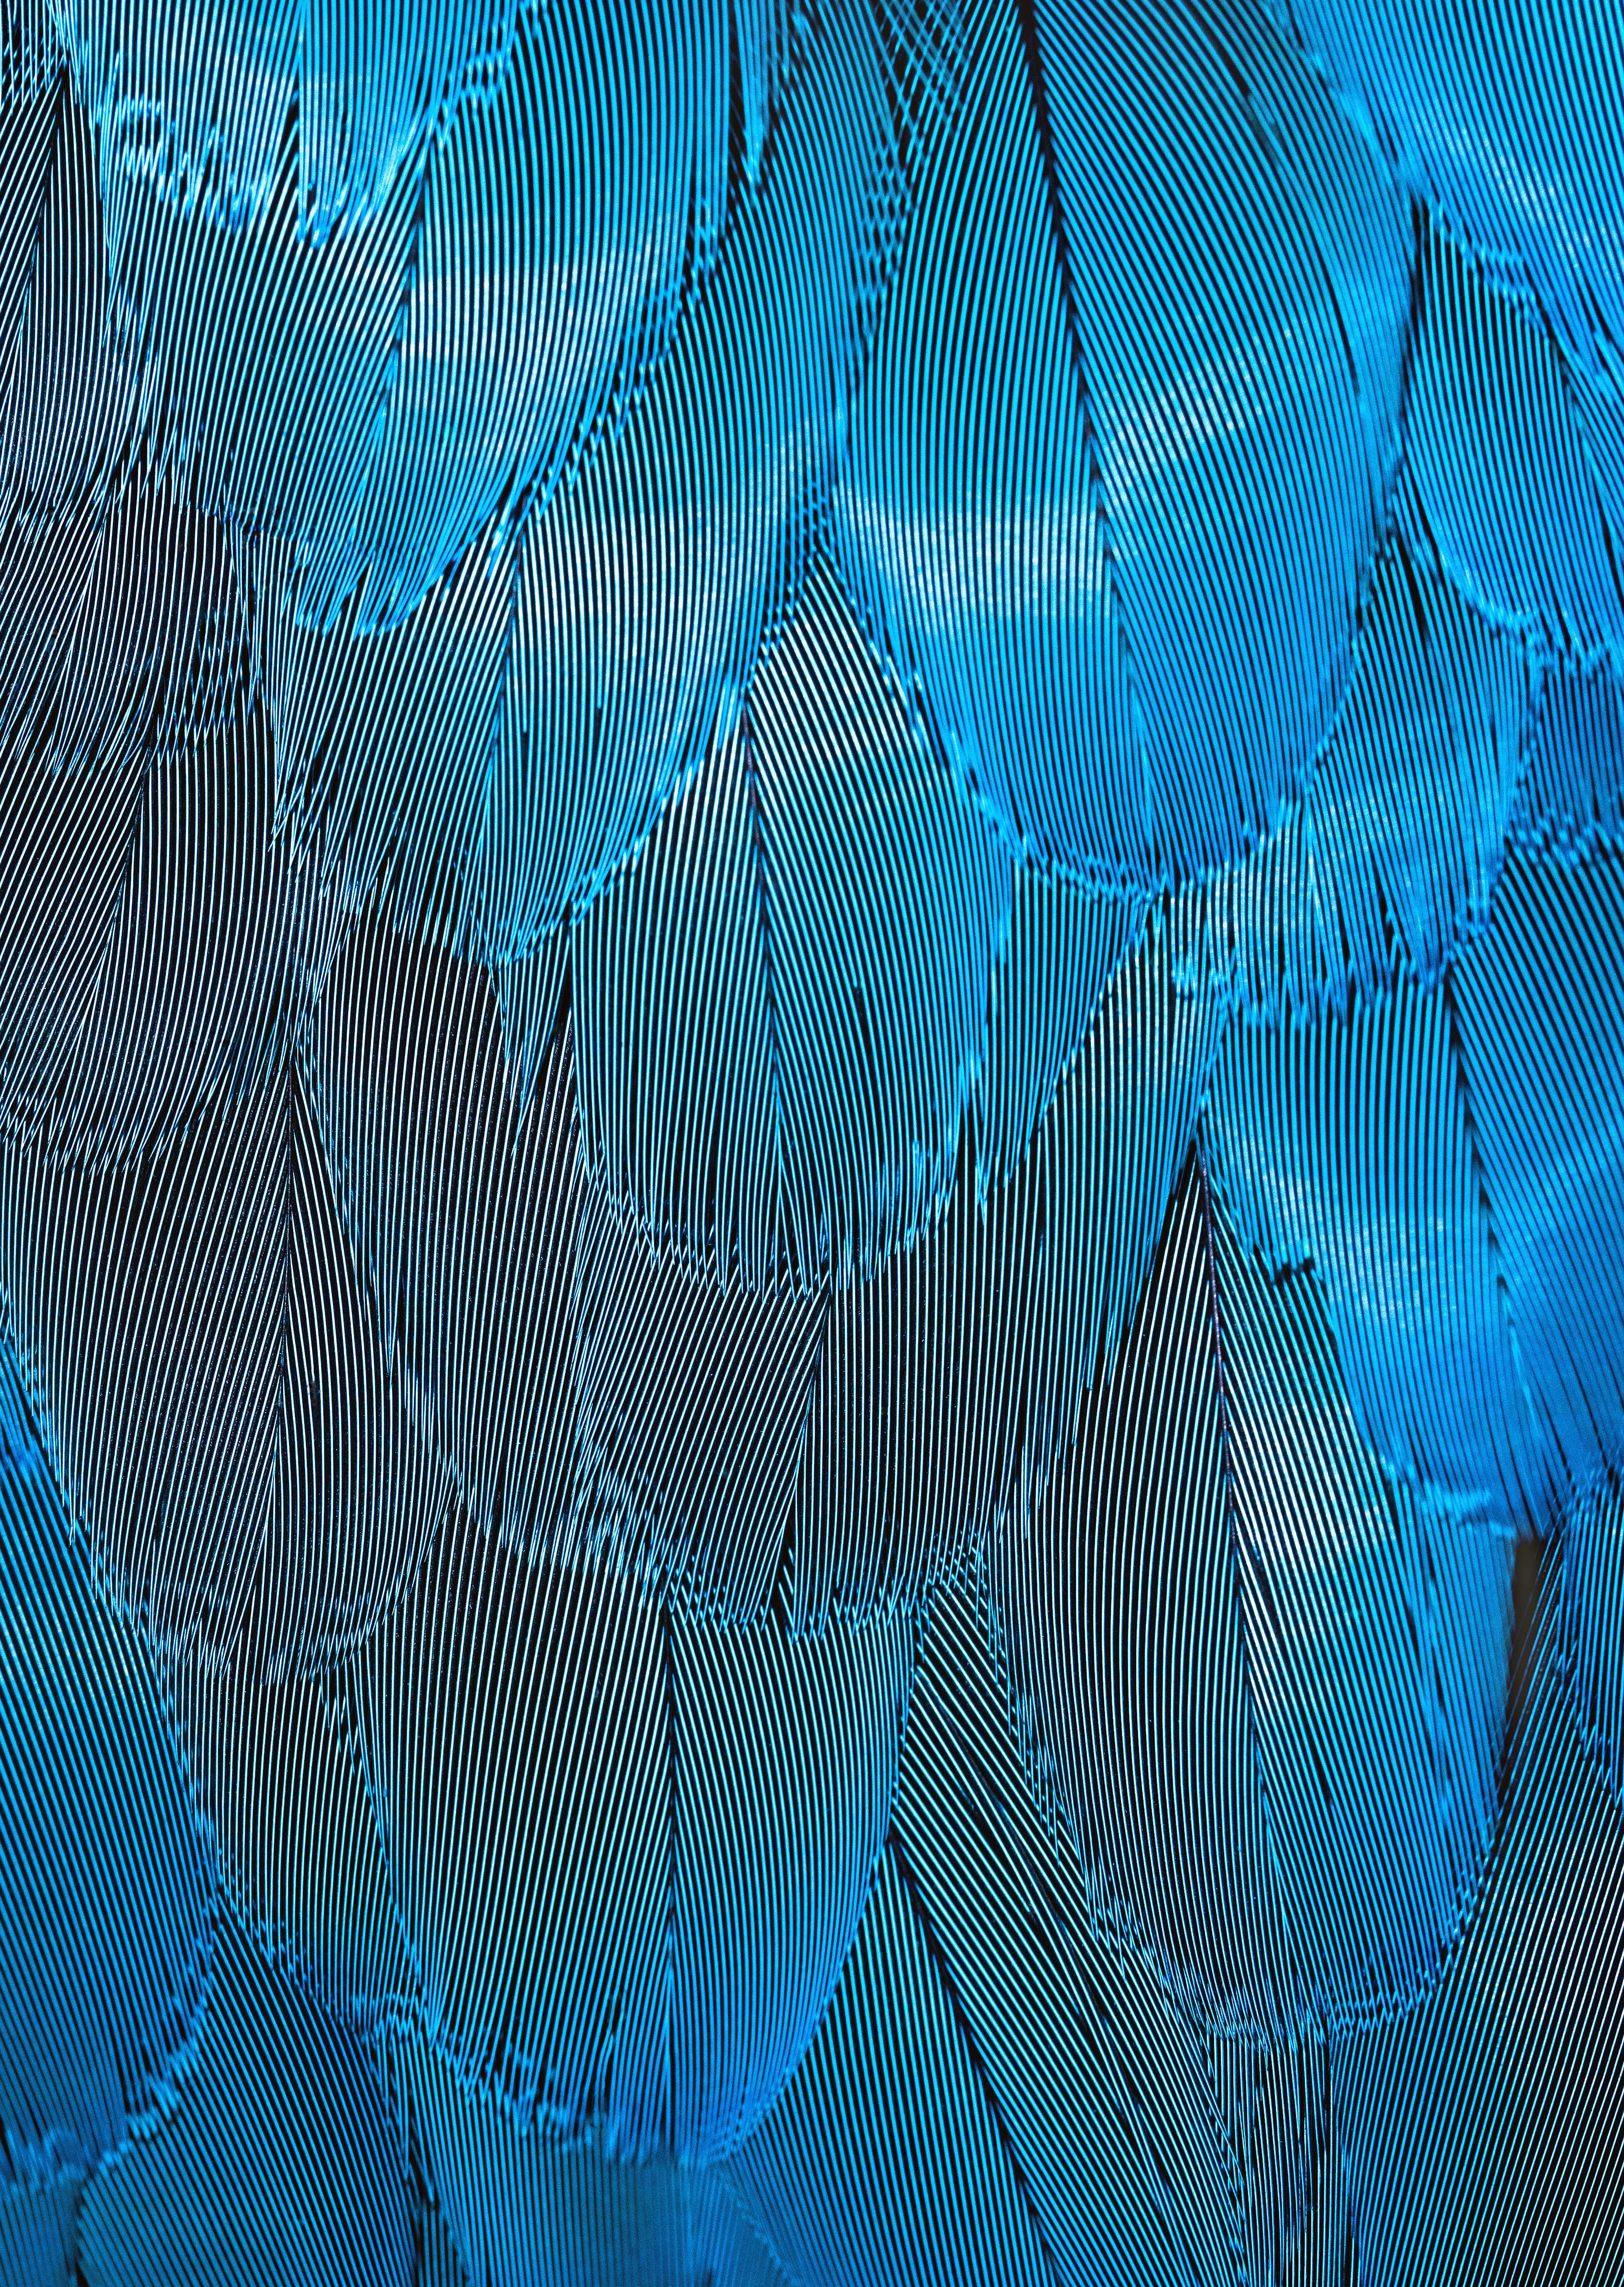 macro, feather, textures, blue, texture, iridescent